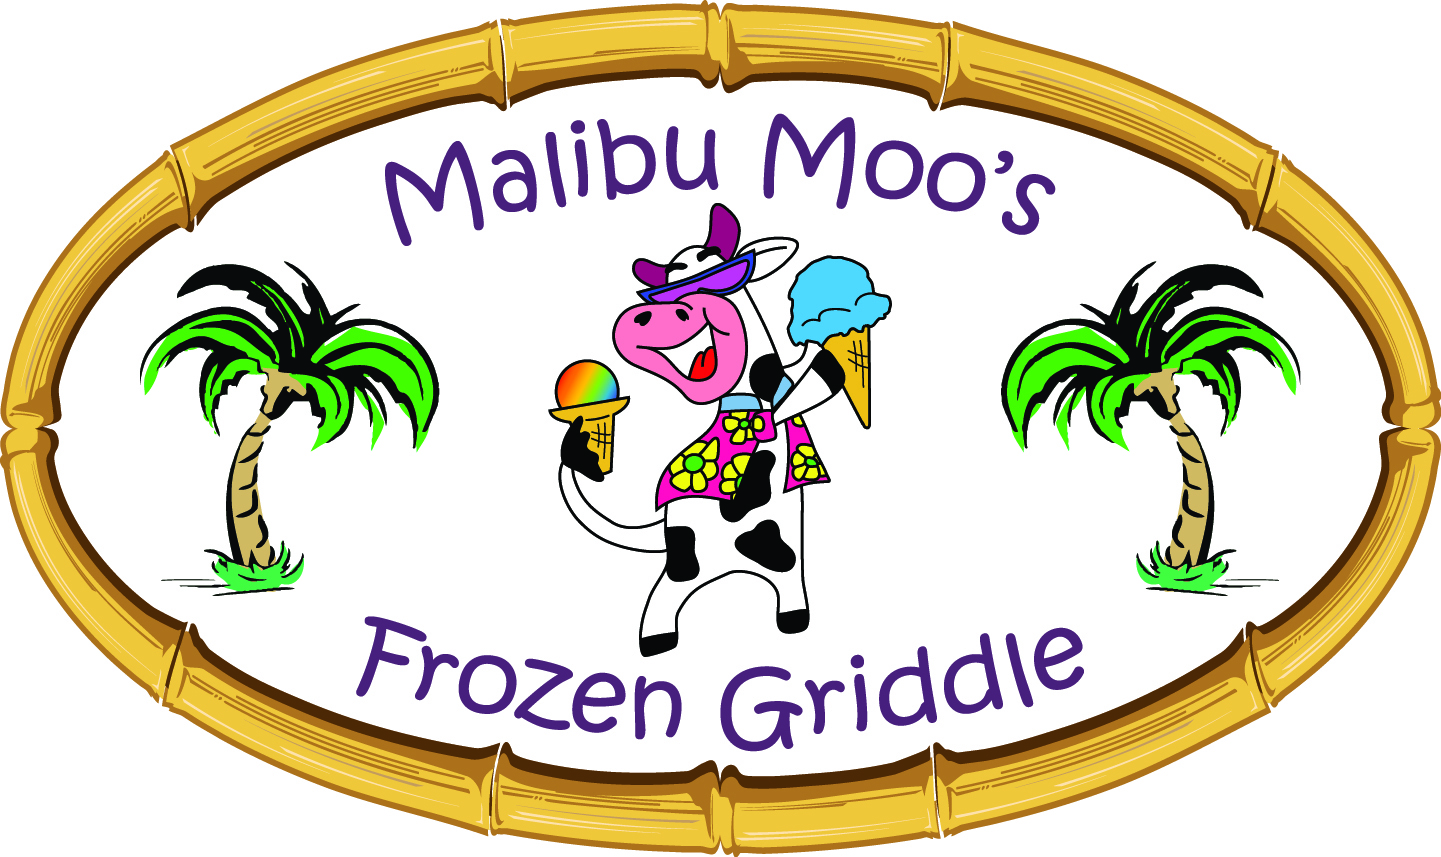 Malibu Moo's Frozen Griddle